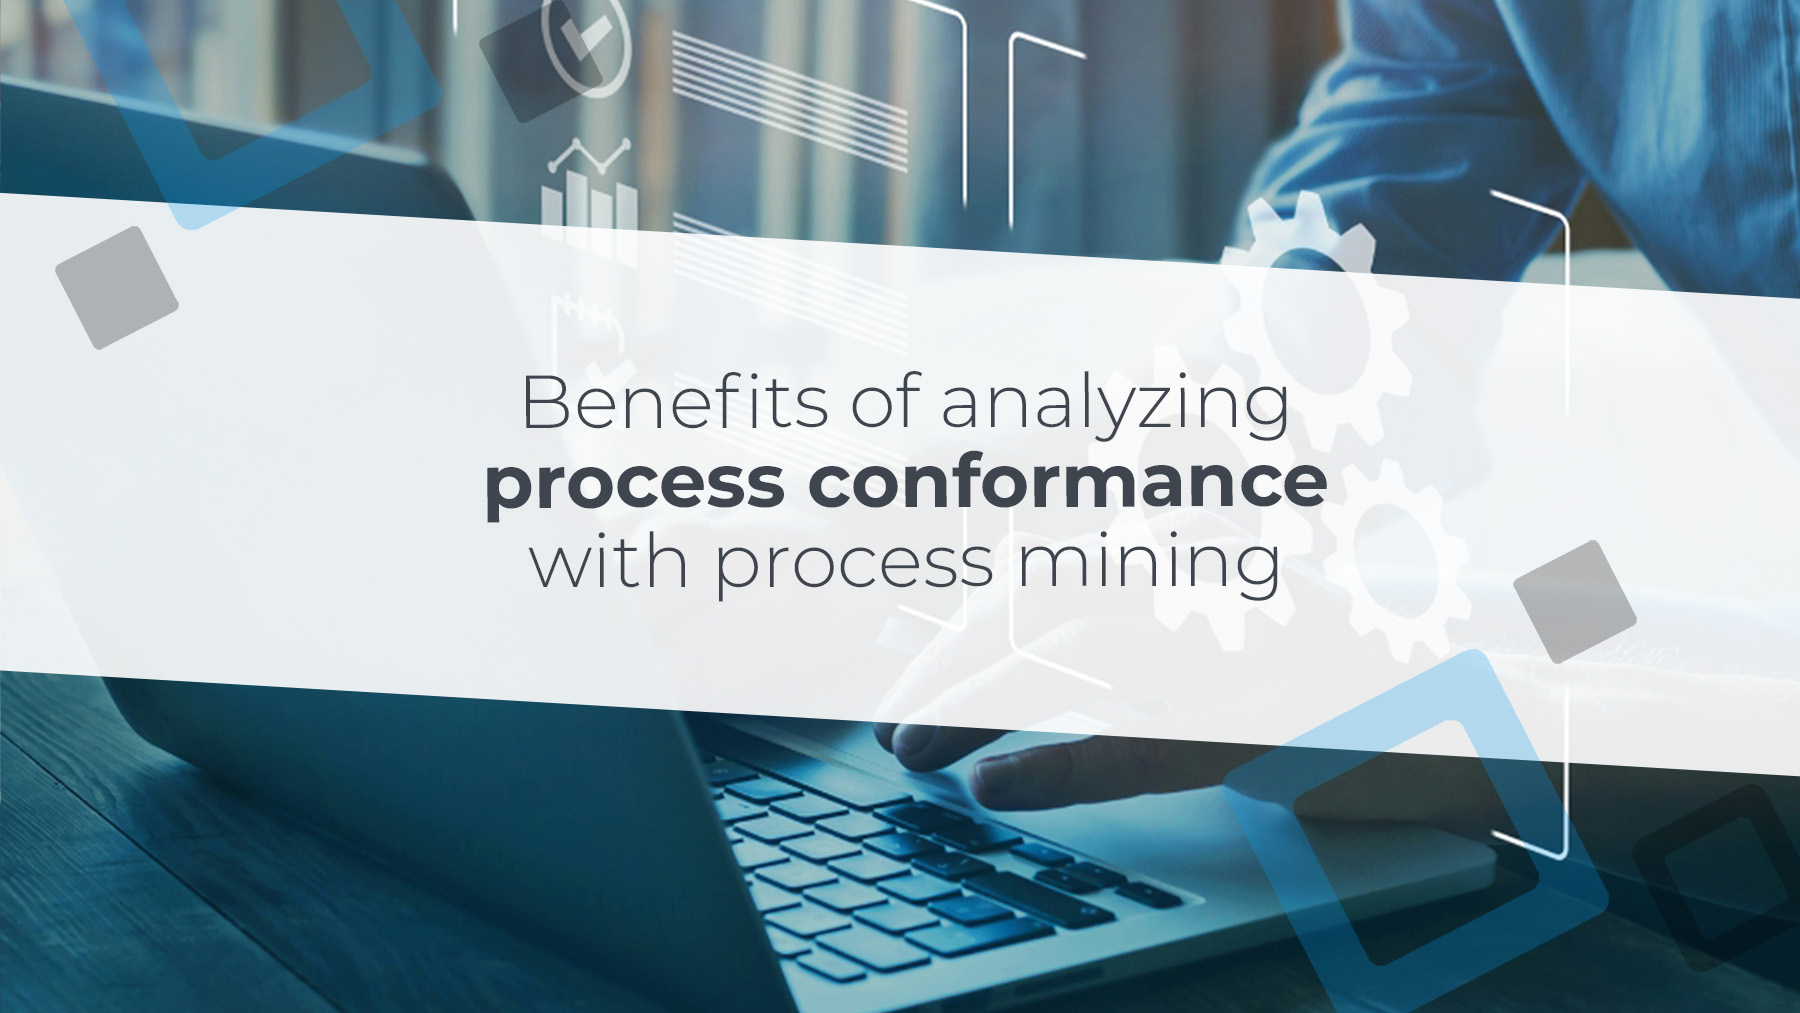 conformance-analysis-checking-process-mining-benefits+blog